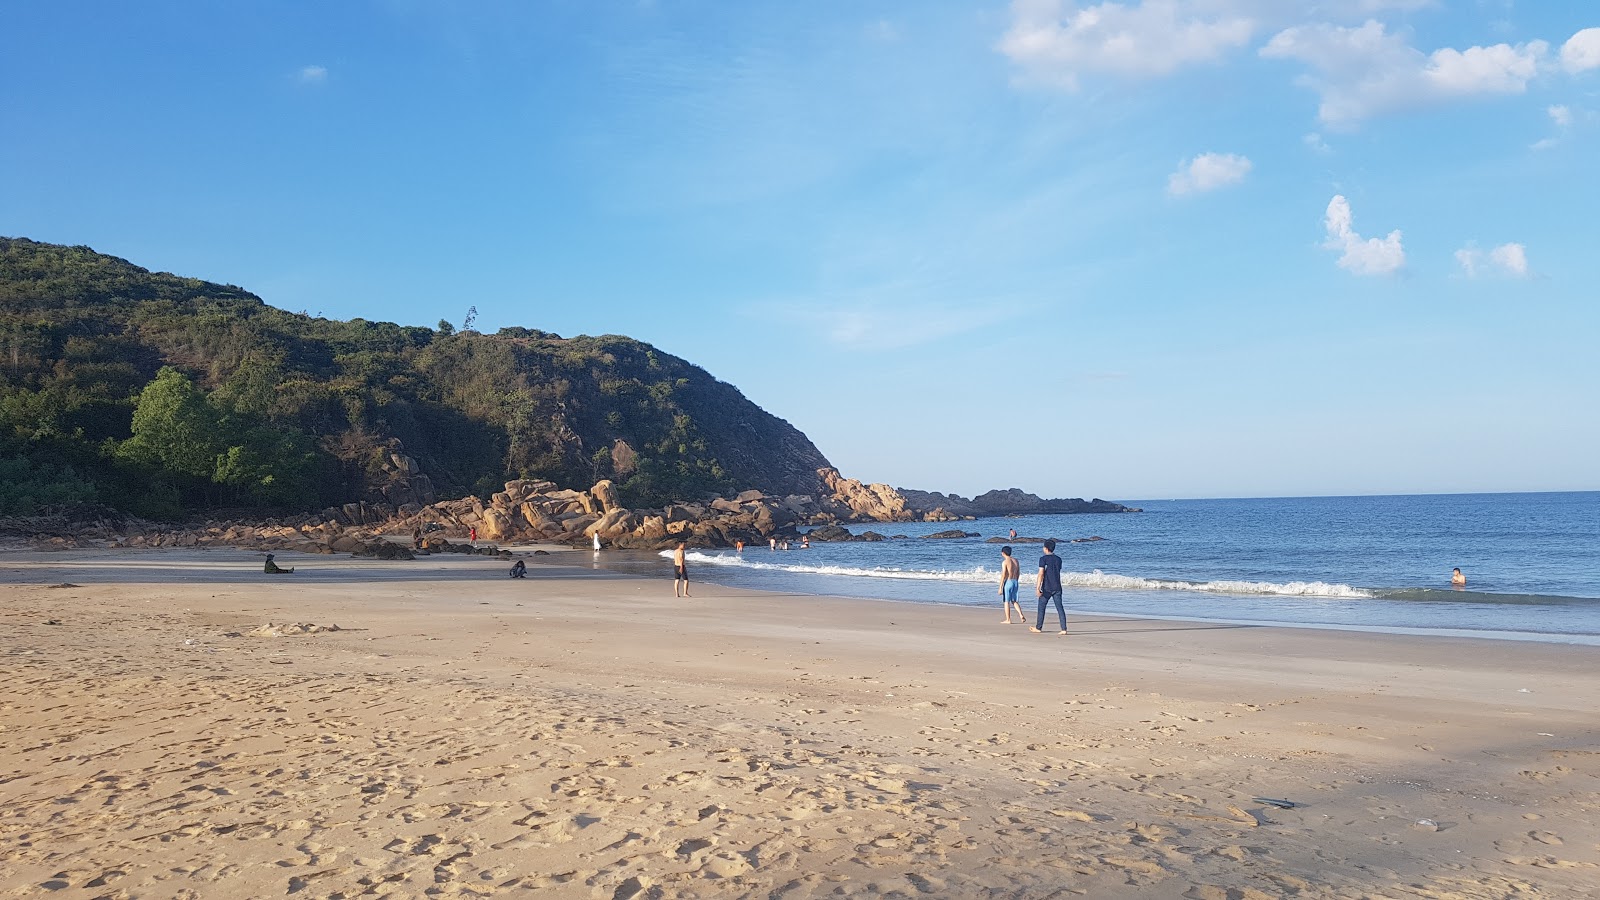 Foto de Hoa Thanh Beach - lugar popular entre os apreciadores de relaxamento